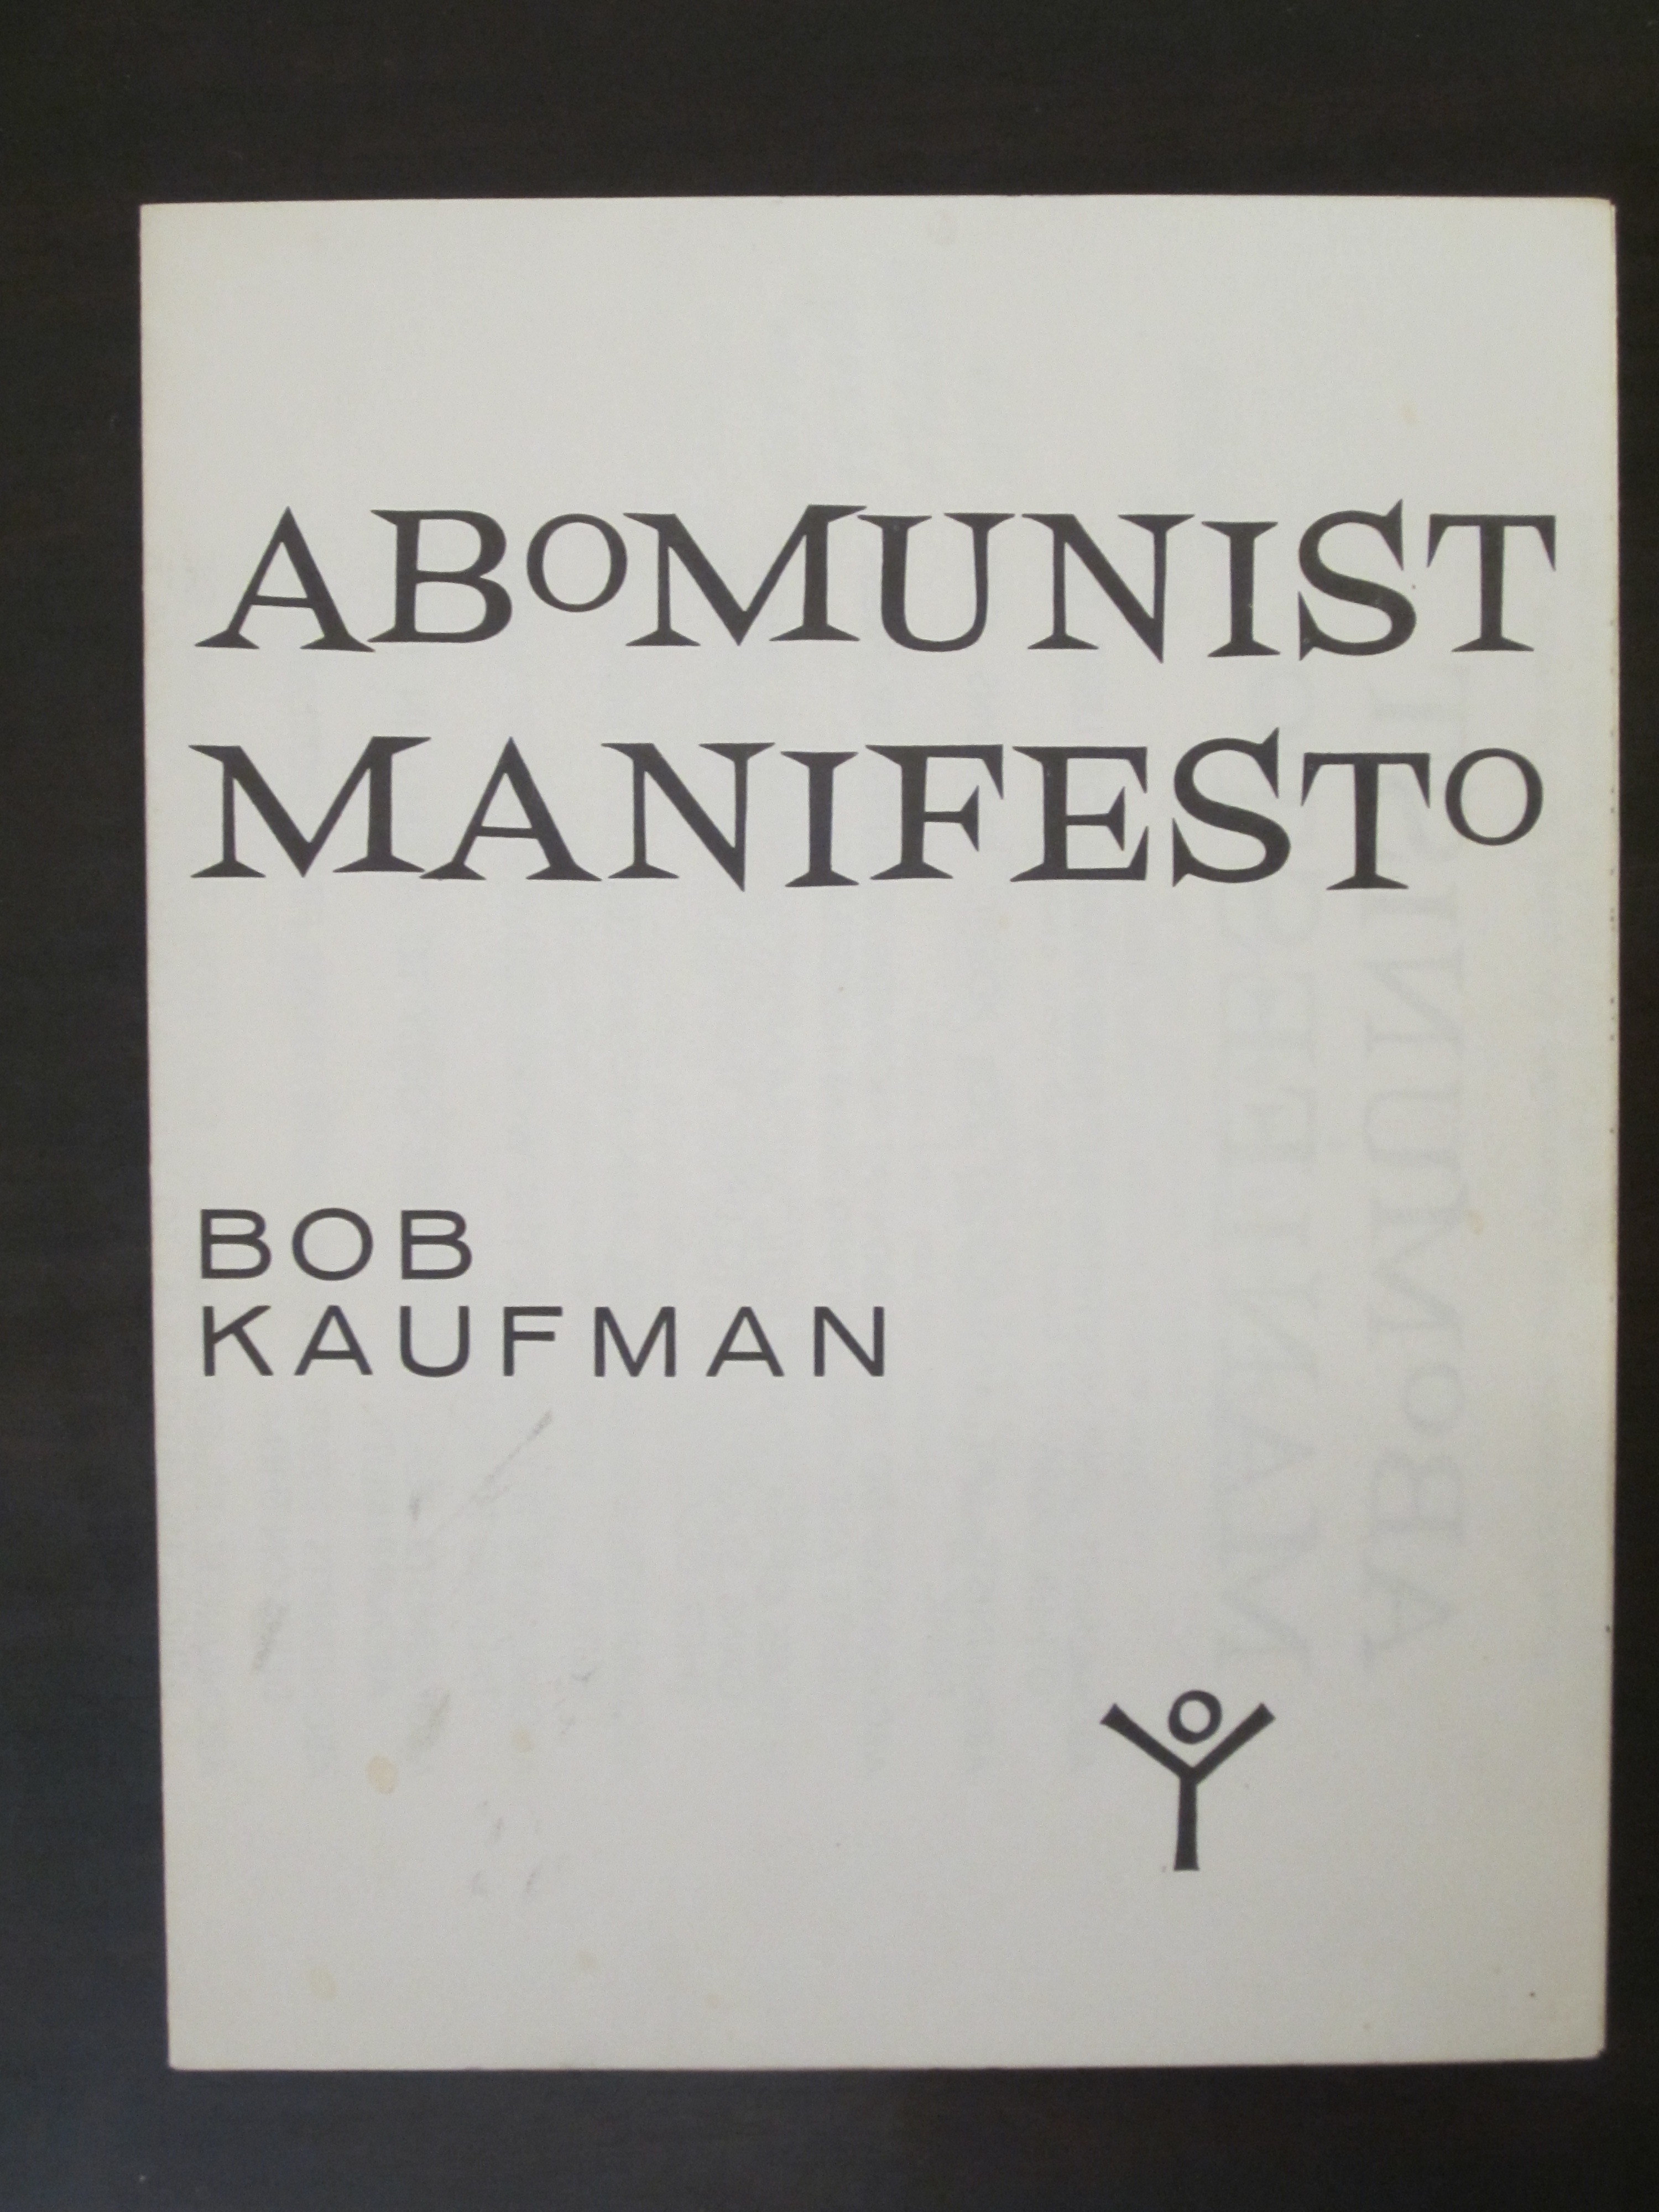 (Abomunist Manifesto by Bob Kaufman. Marvin Tatum Collection of Contemporary Literature. Photograph by Petrina Jackson)